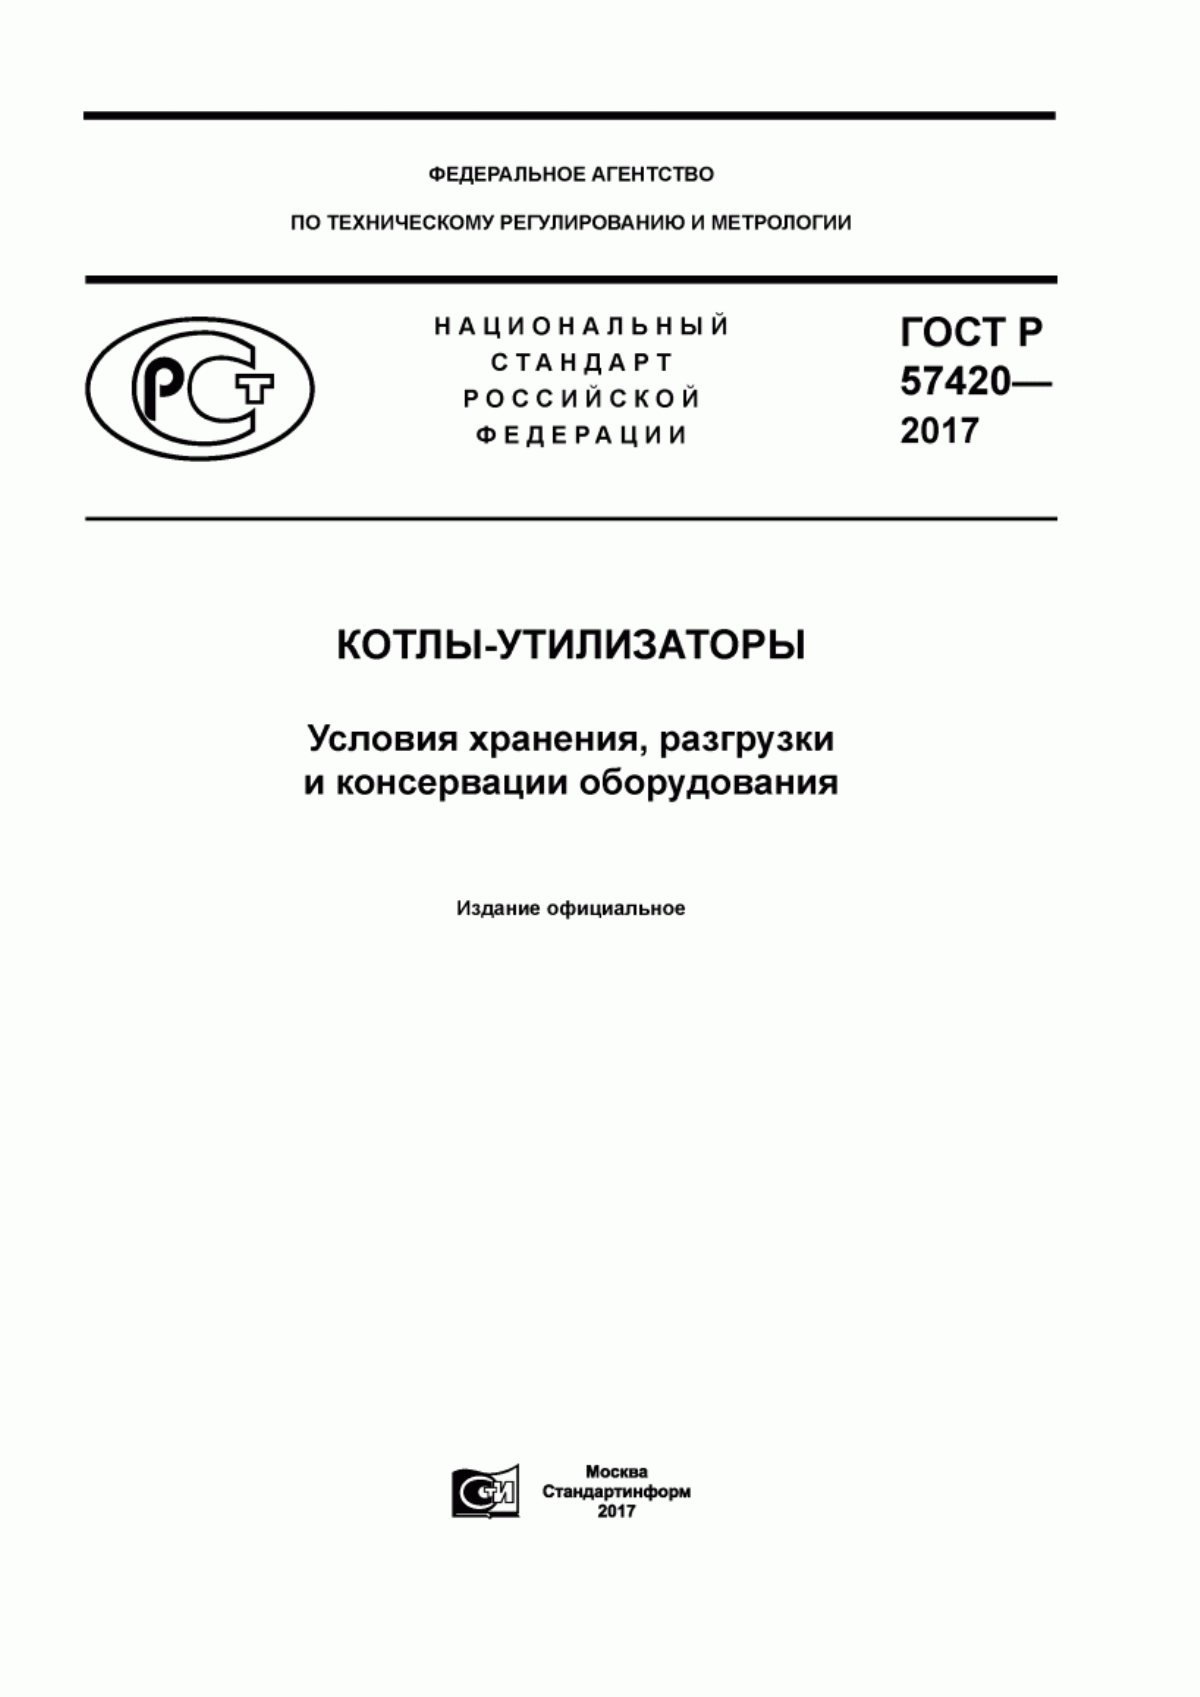 ГОСТ Р 57420-2017 Котлы-утилизаторы. Условия хранения, разгрузки и консервации оборудования